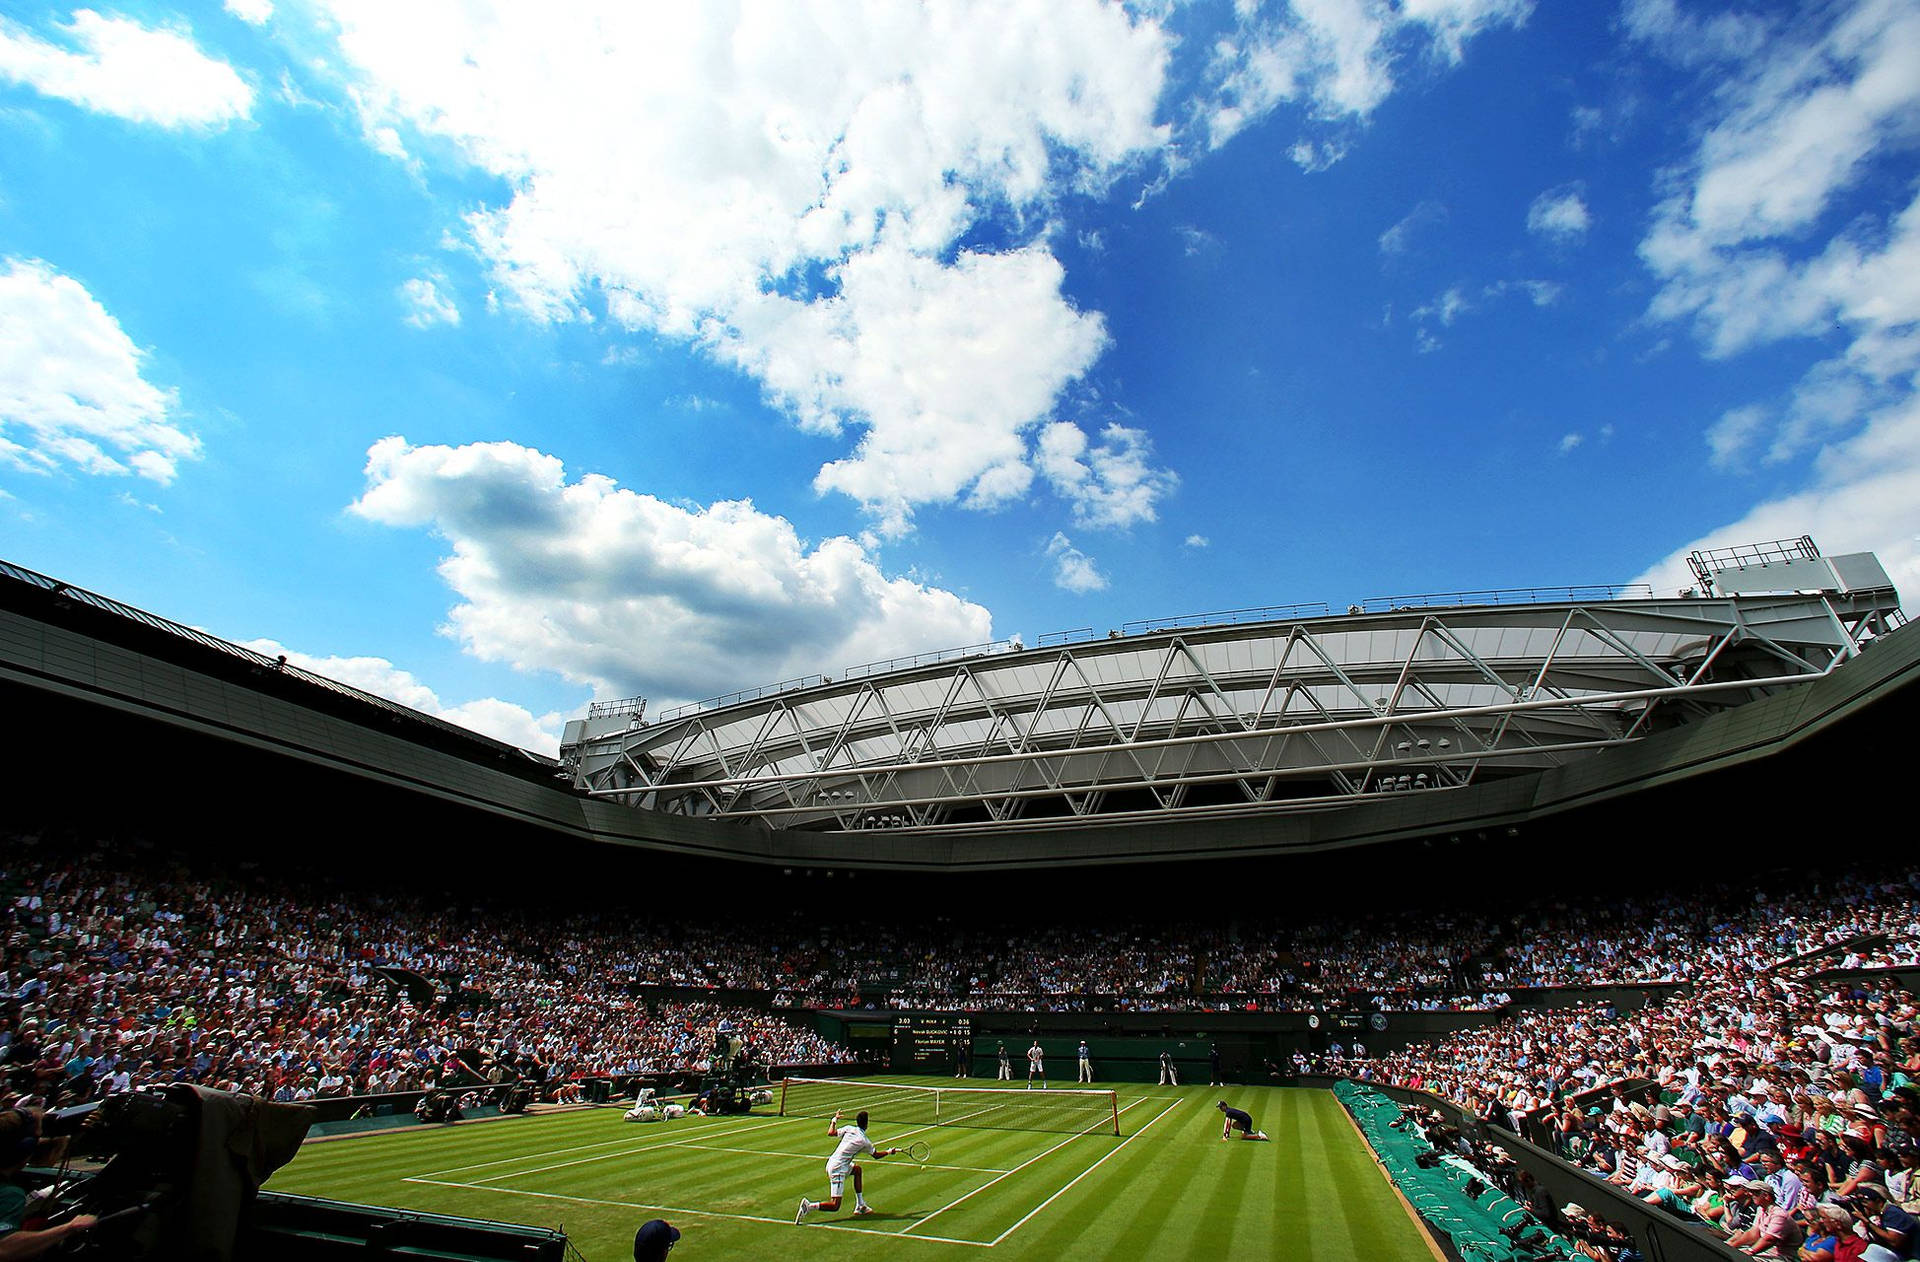 Spectacular Wimbledon Open Roof Stadium In Full Swing. Background